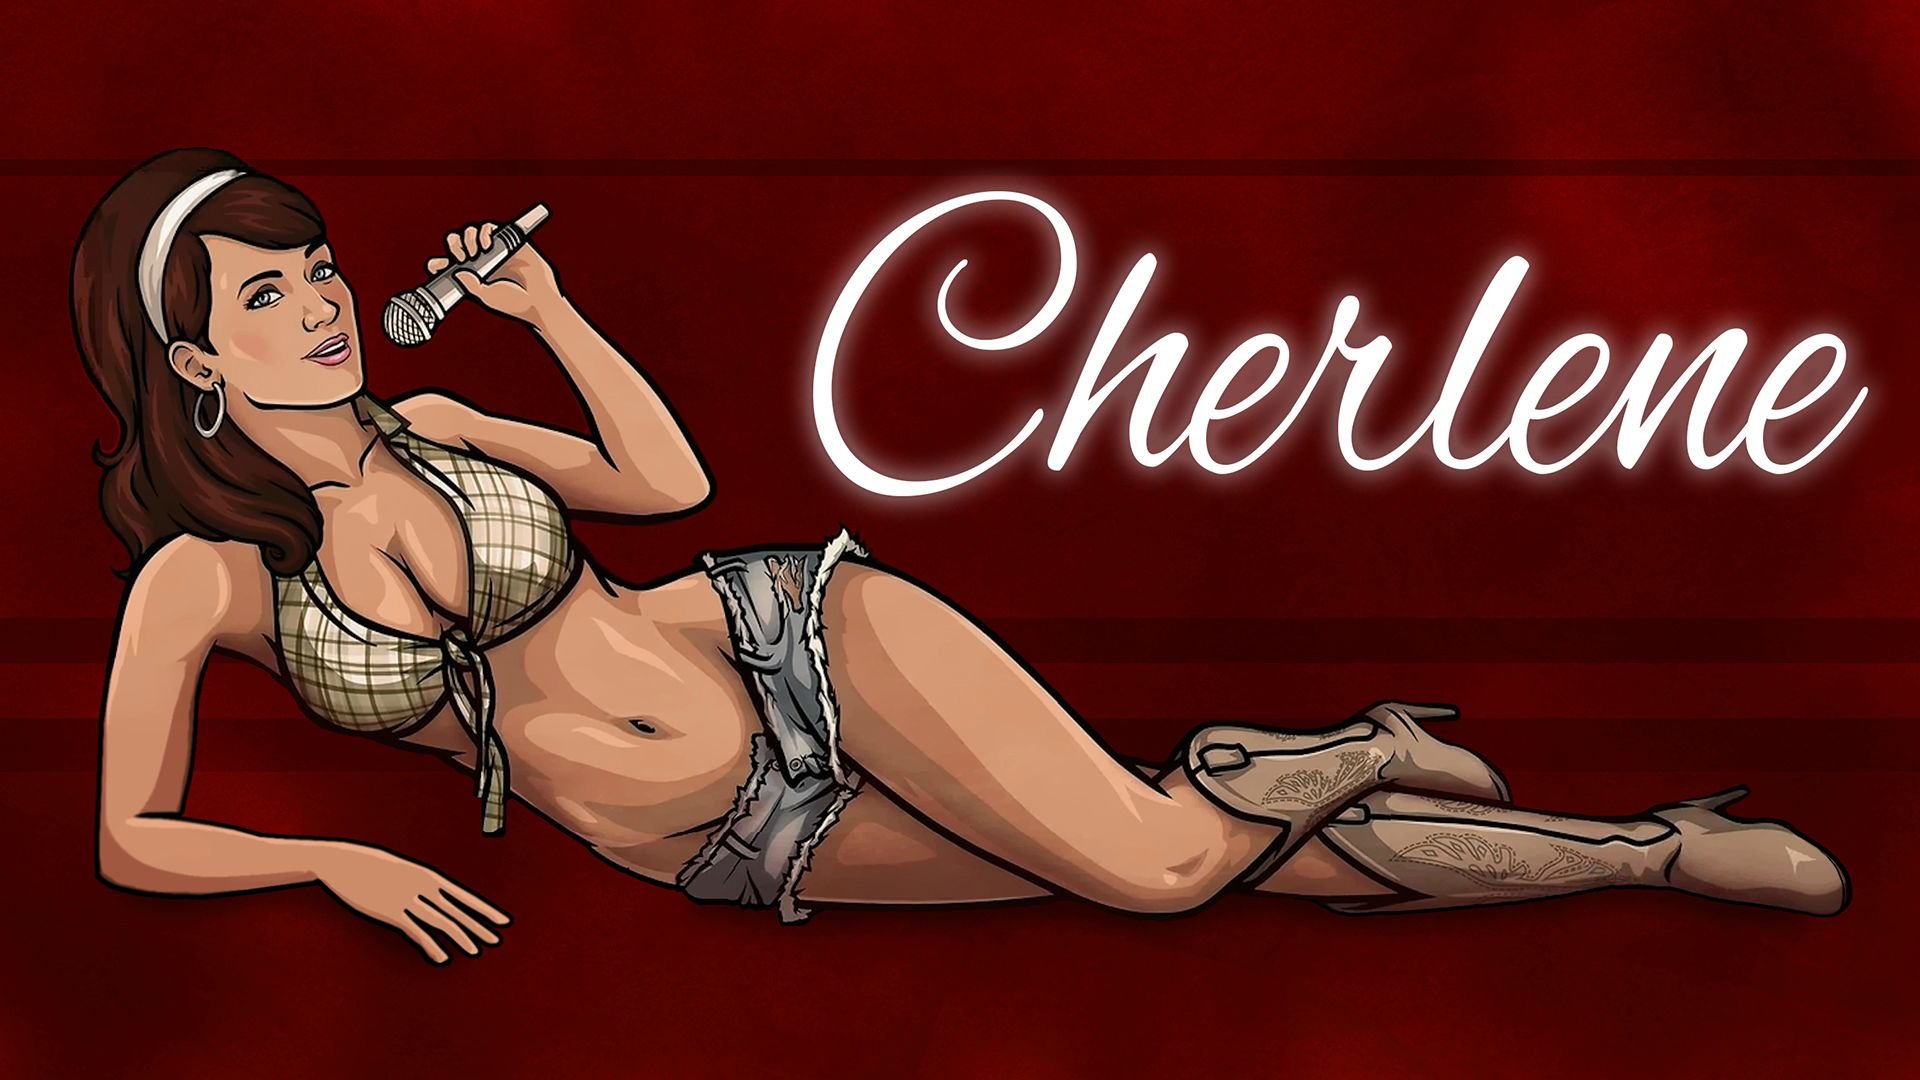 Cheryl Tunt Porn - Cheryl tunt charlene porn nude breasts